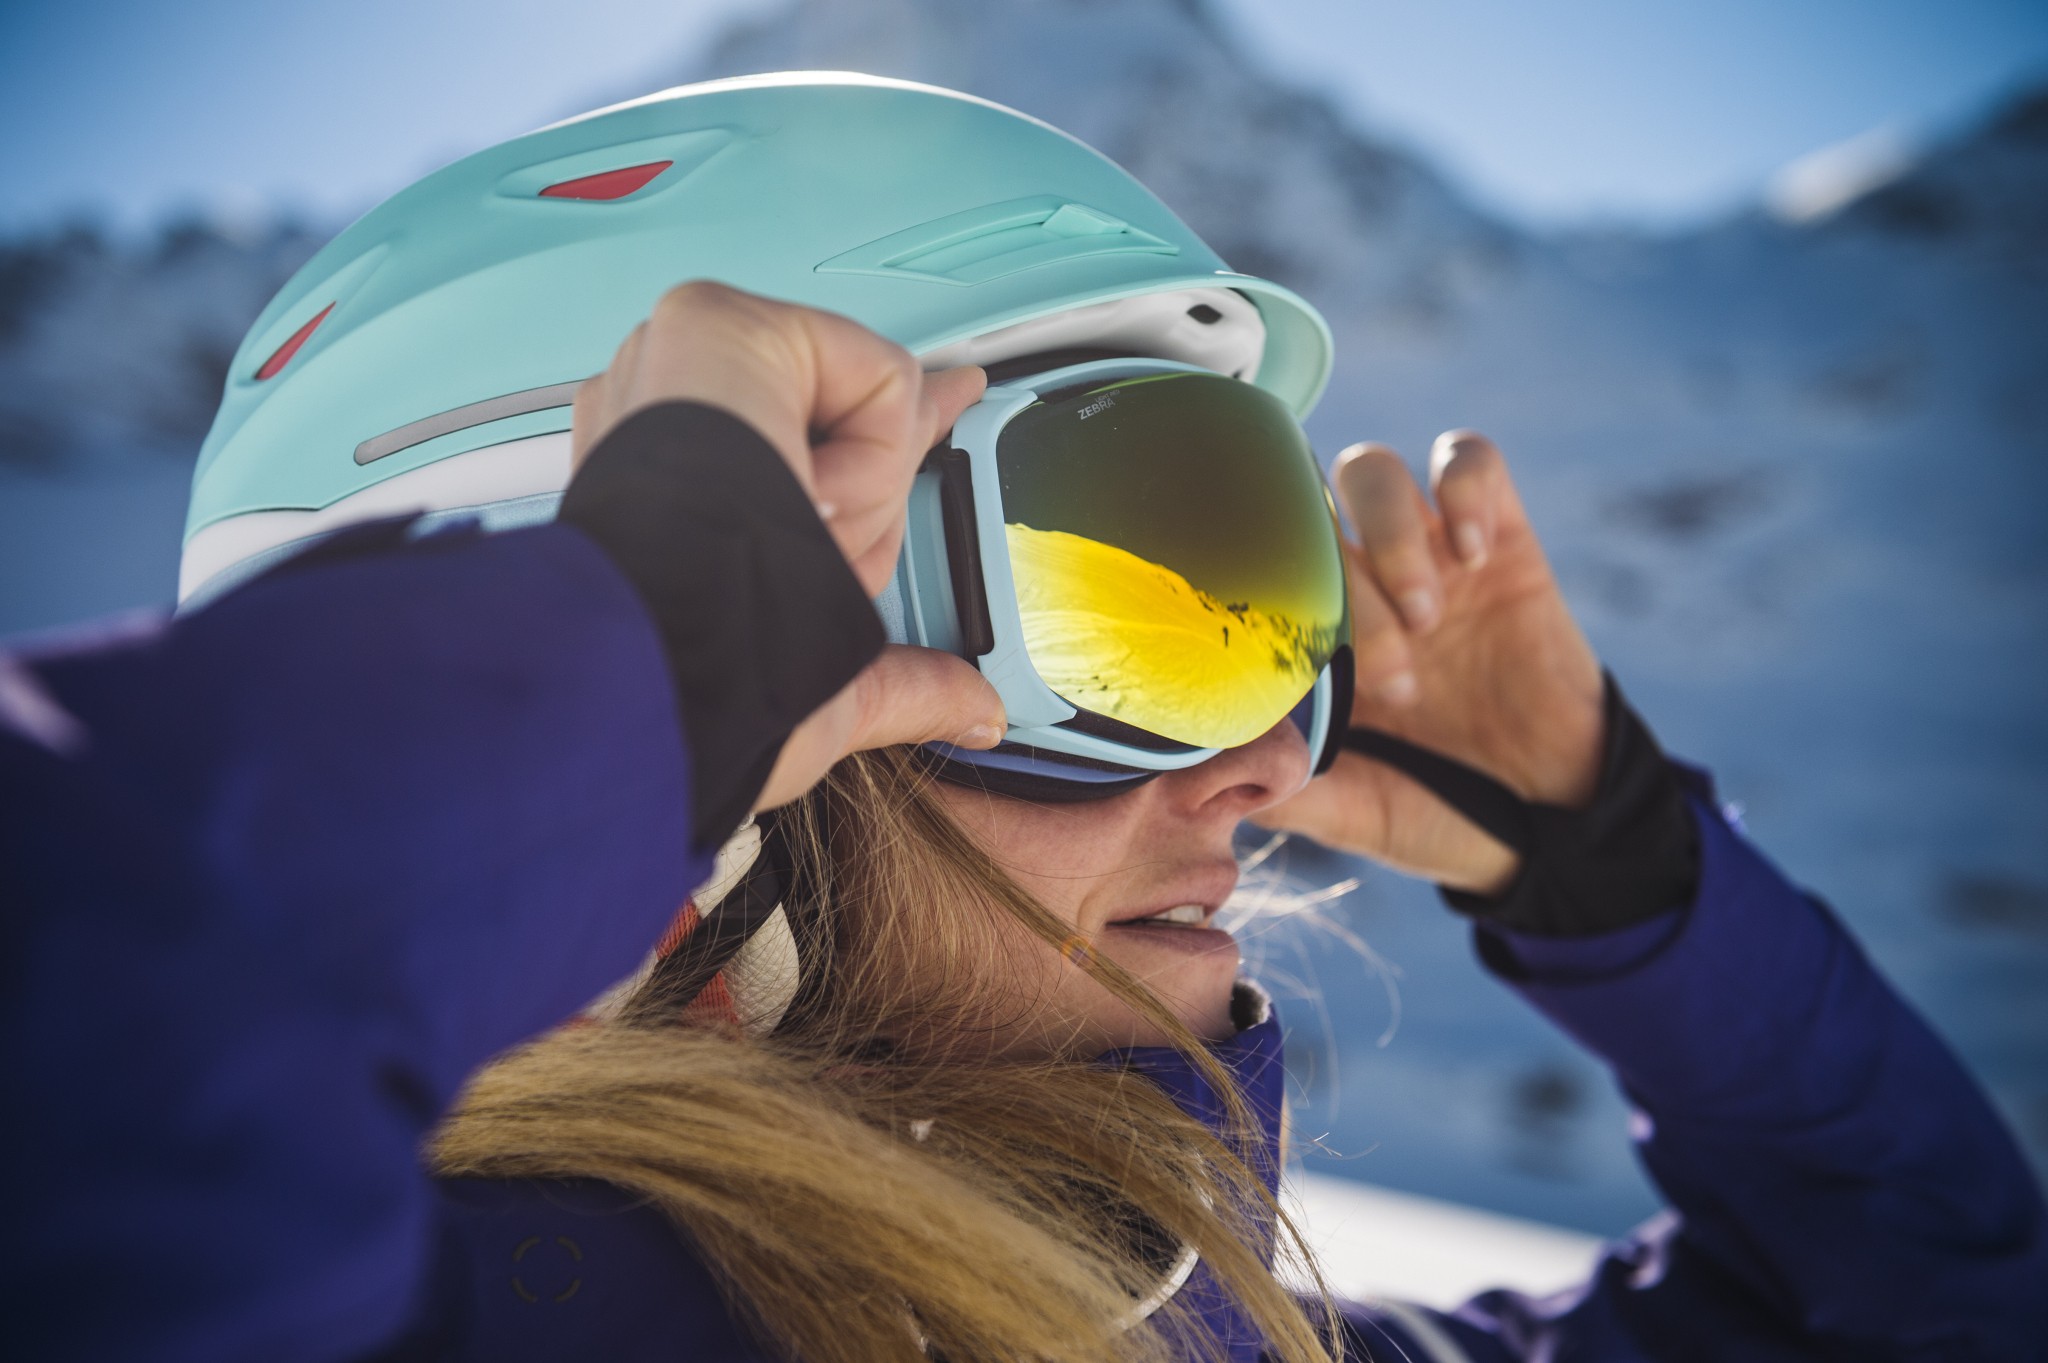 Julbo Starwind goggles offer fog-free vision on the ski slopes. Photo: Marc Daviet